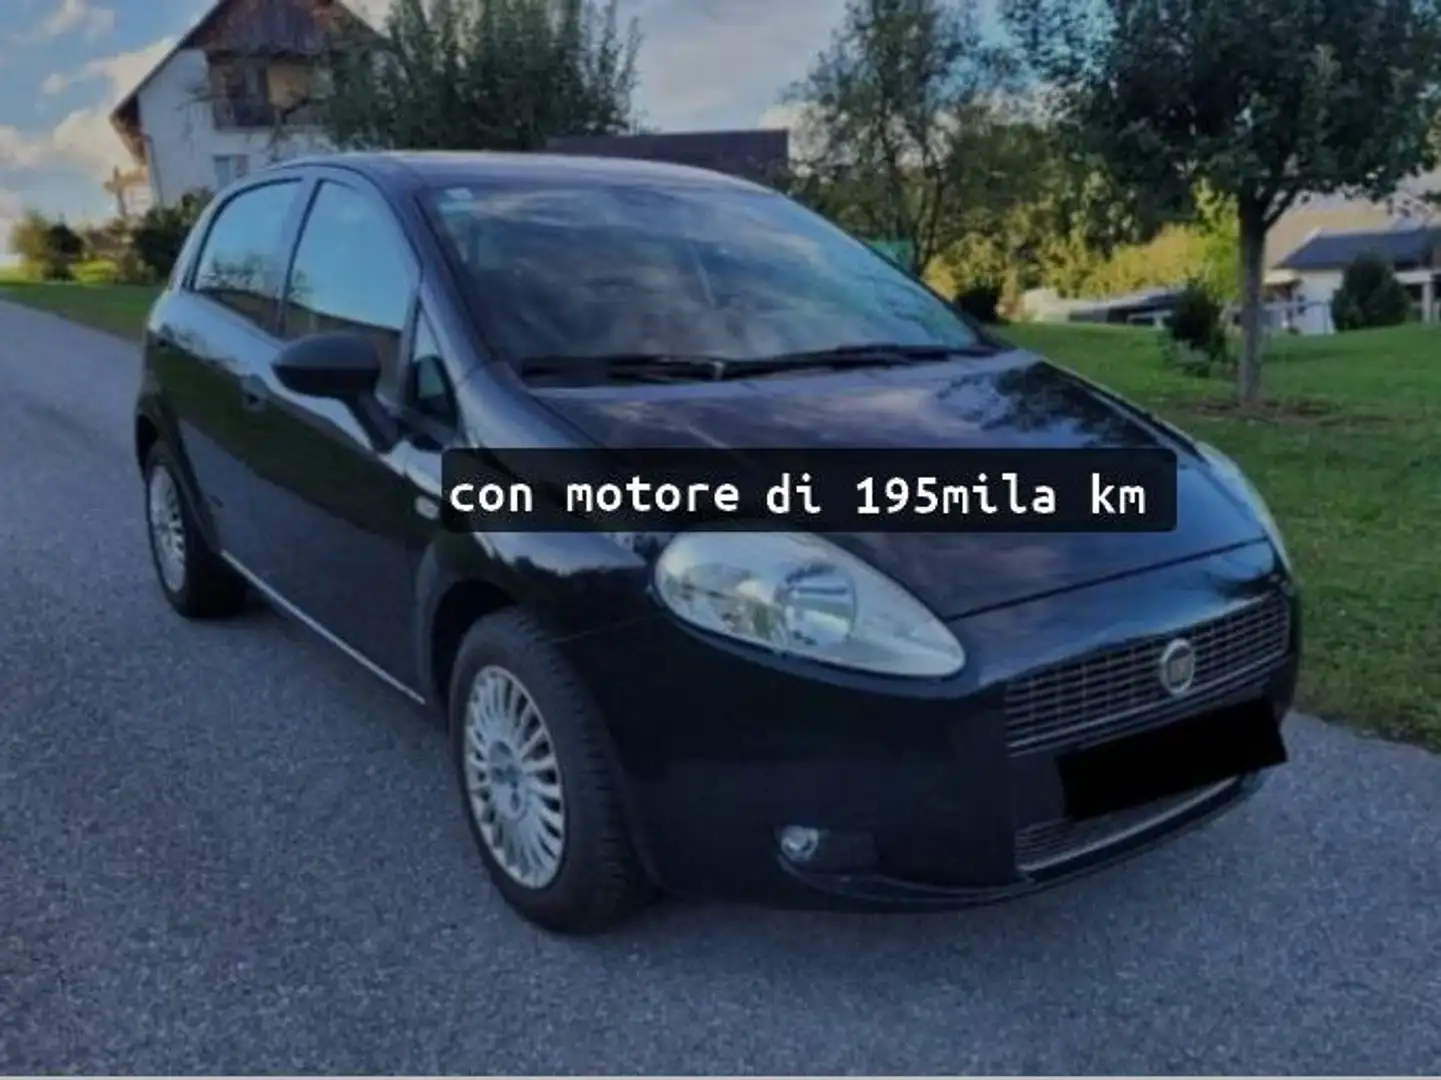 Fiat Grande Punto usata a TRENTOLA DUCENTA per € 2.500,-